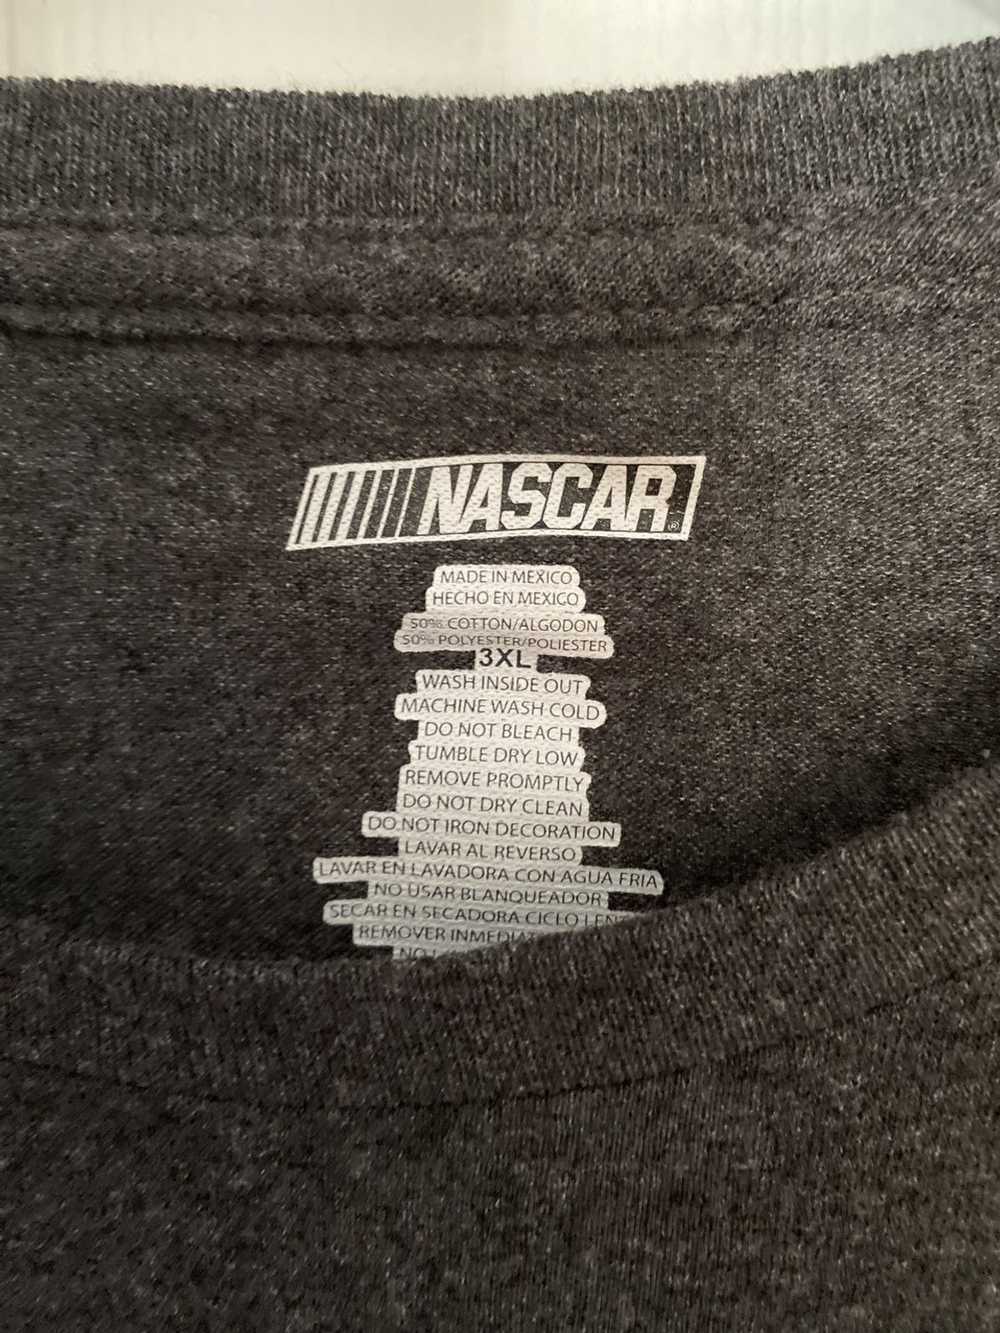 NASCAR Tony Stewart Stewart Haas racing logo NASC… - image 2